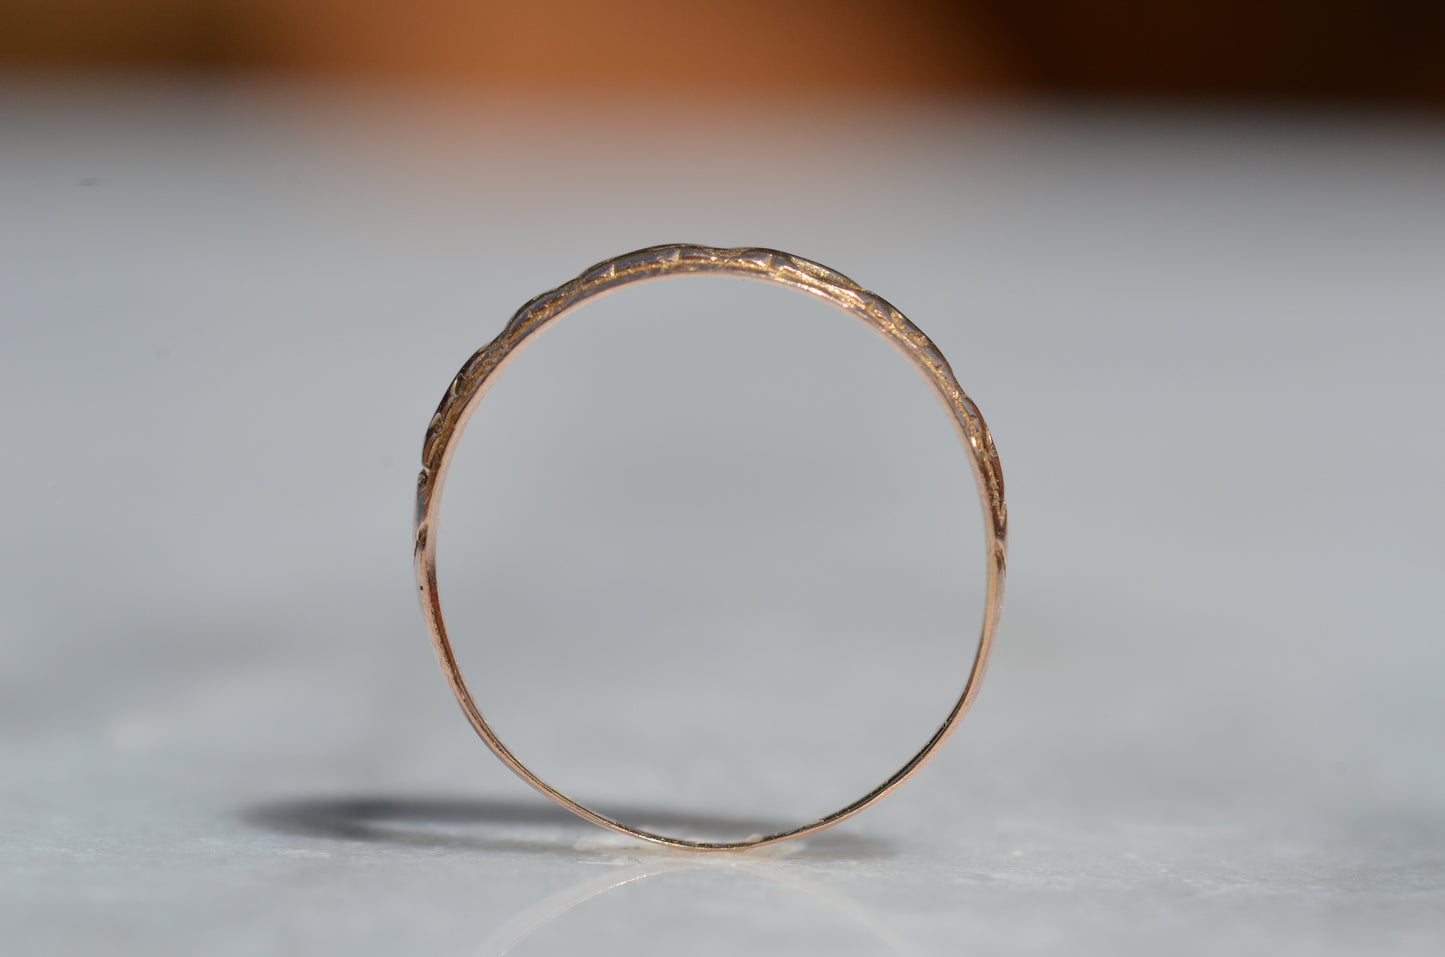 Worn Antique Mizpah Ring